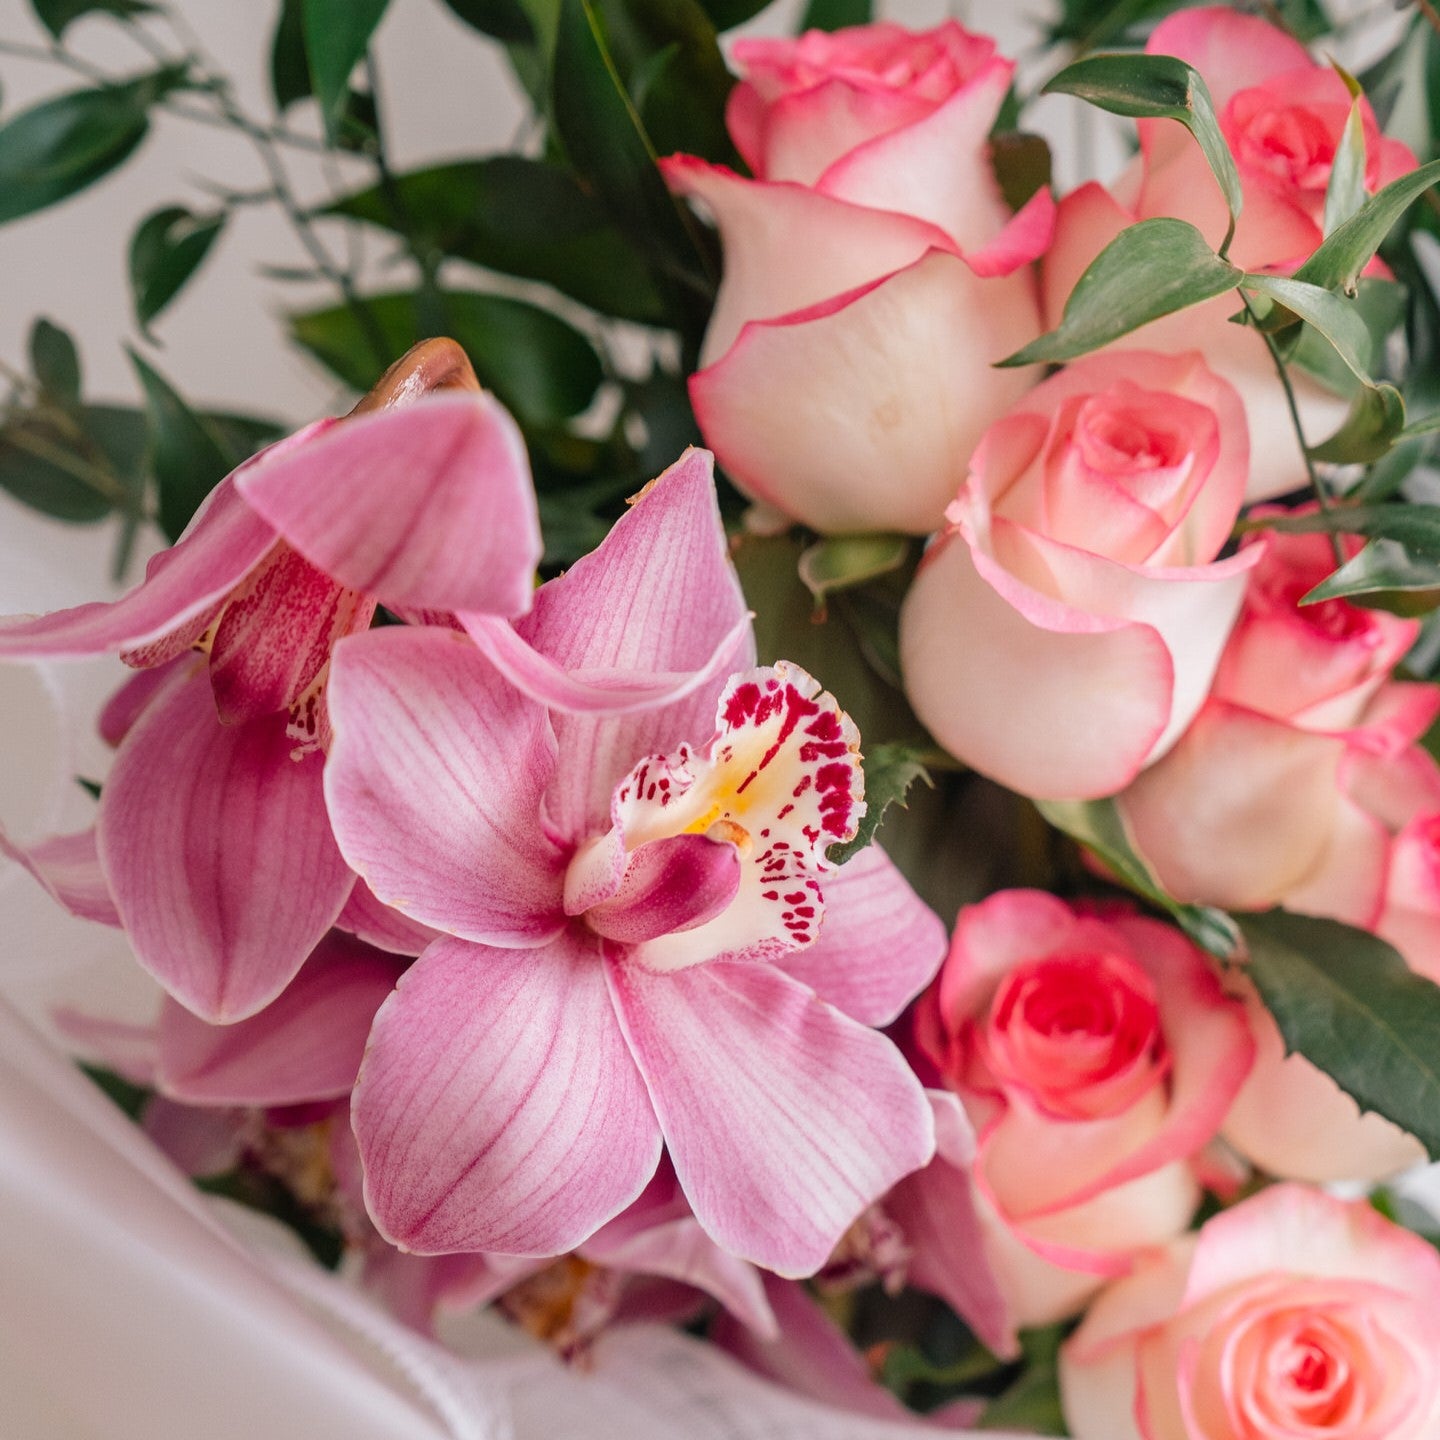 Luxe Cymbidium & Rose Bouquet